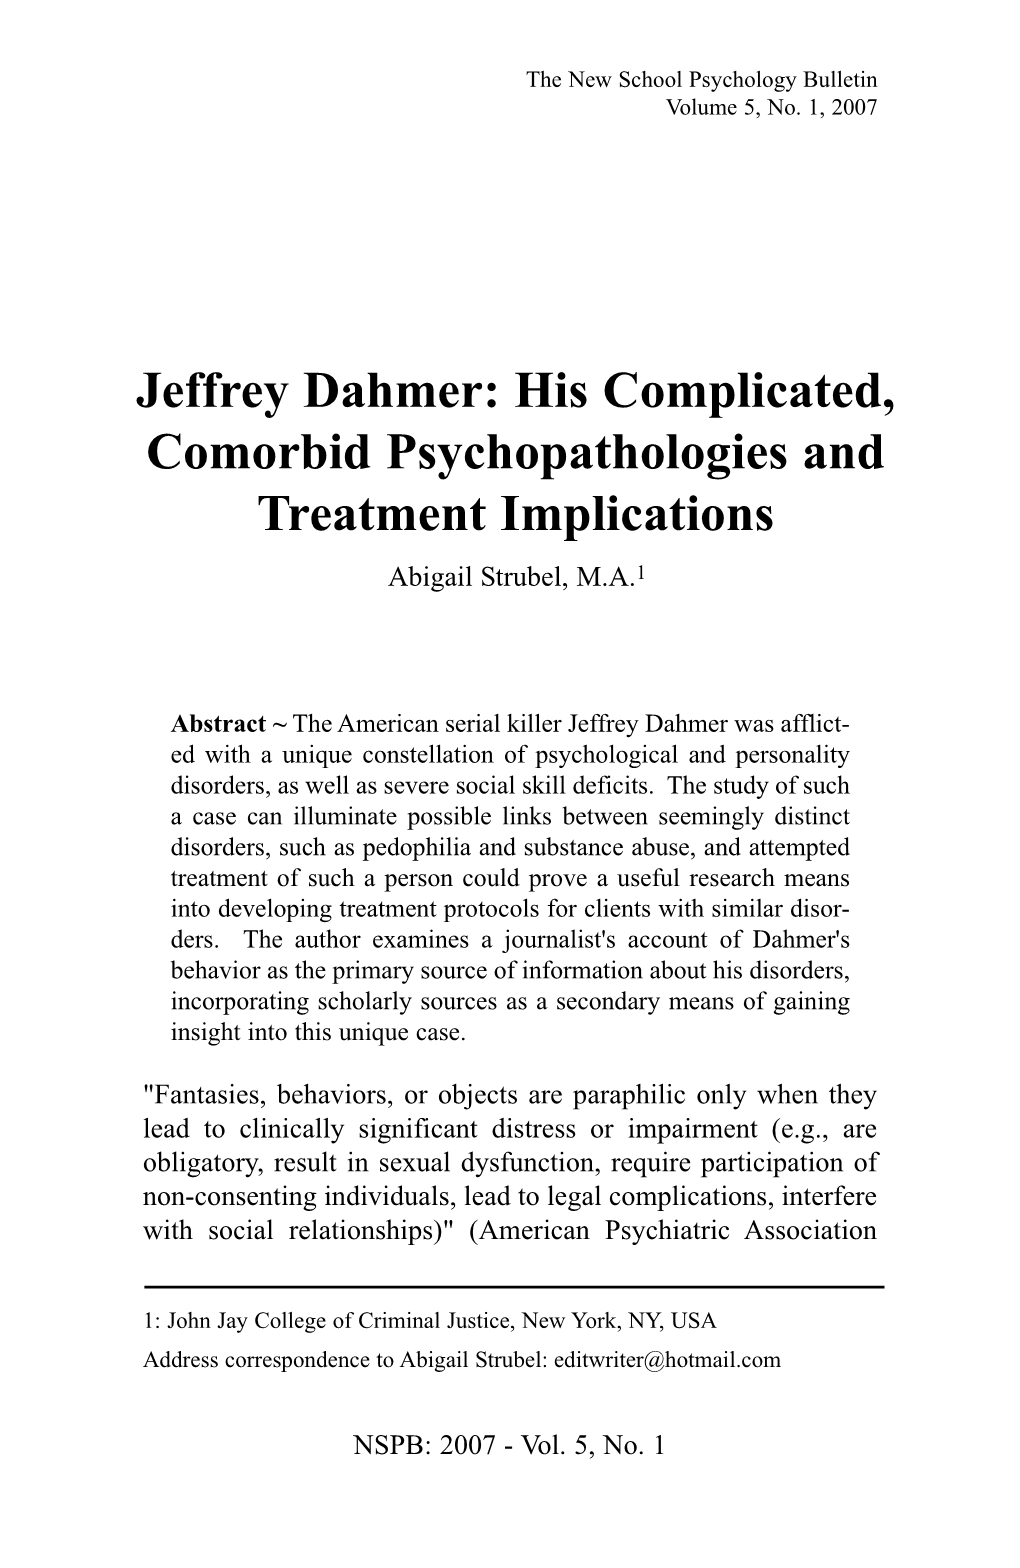 Jeffrey Dahmer: His Complicated, Comorbid Psychopathologies and Treatment Implications Abigail Strubel, M.A.1